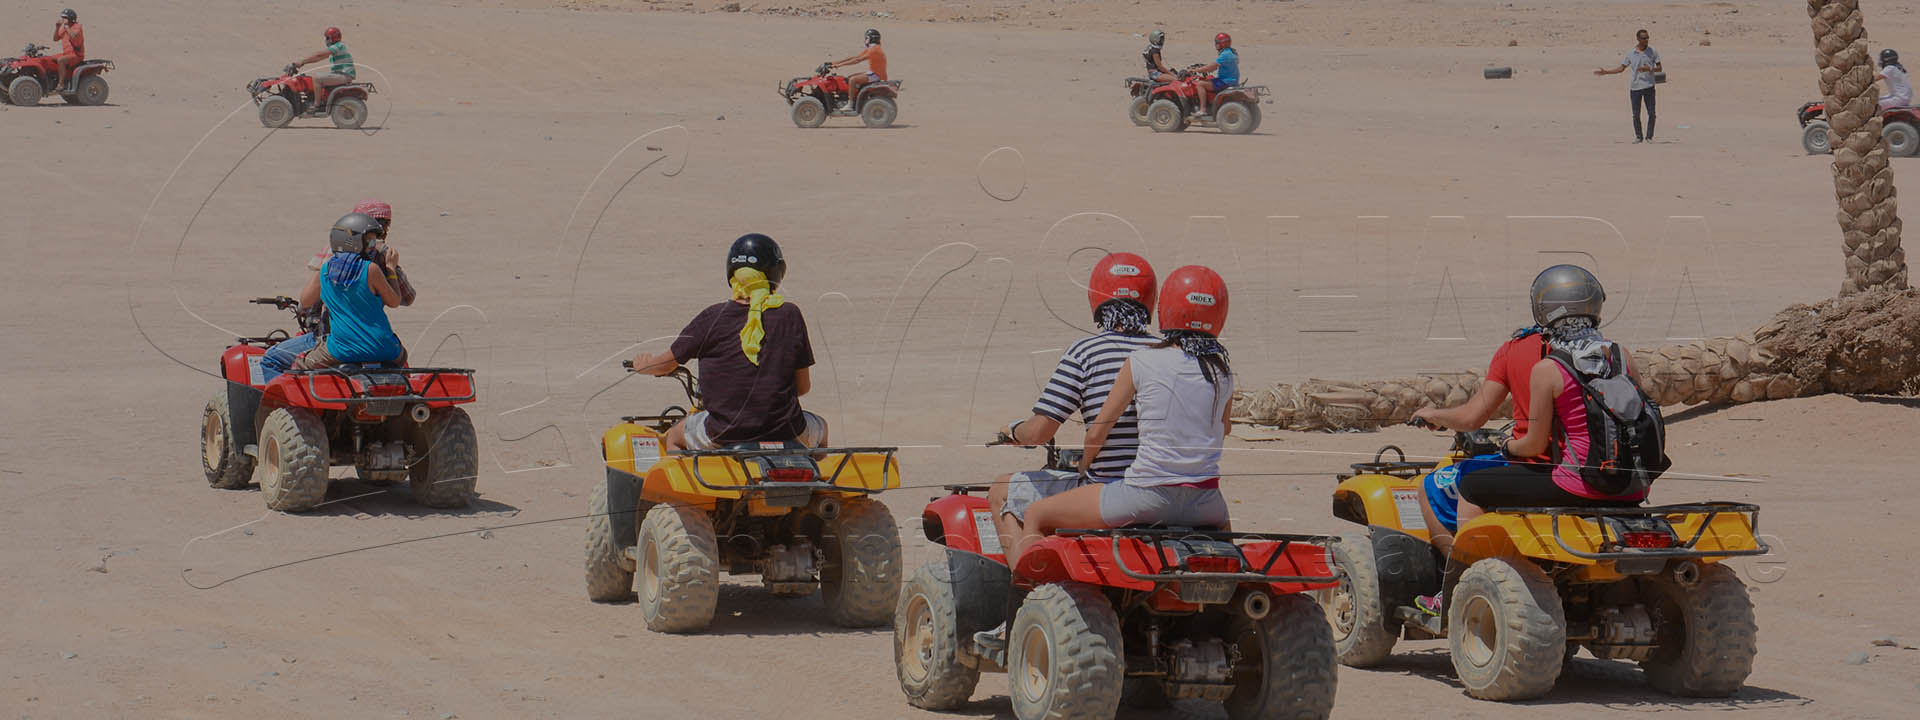 Tour de energía en quad por Hurghada